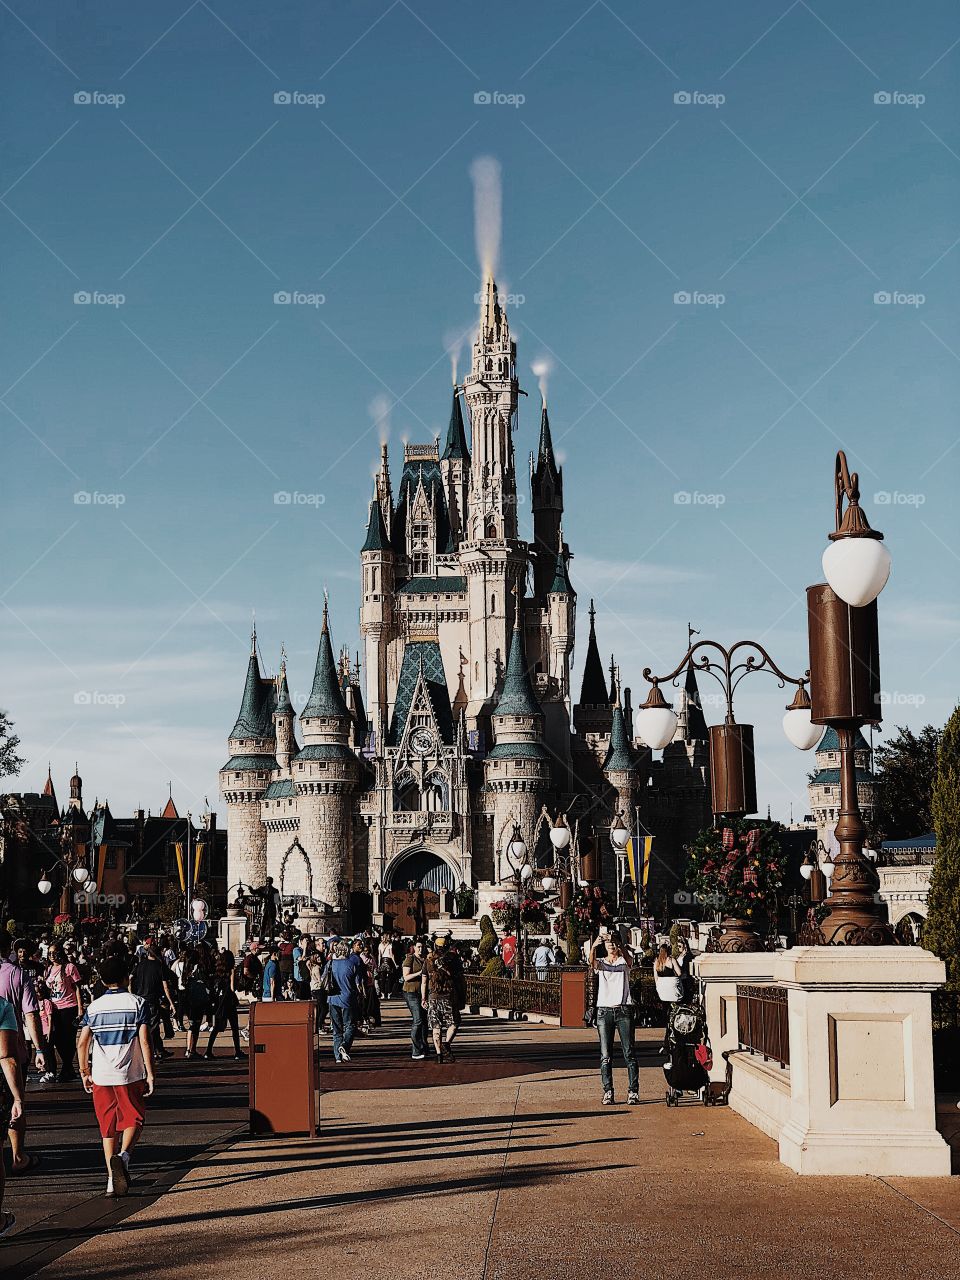 castle at magic kingdom